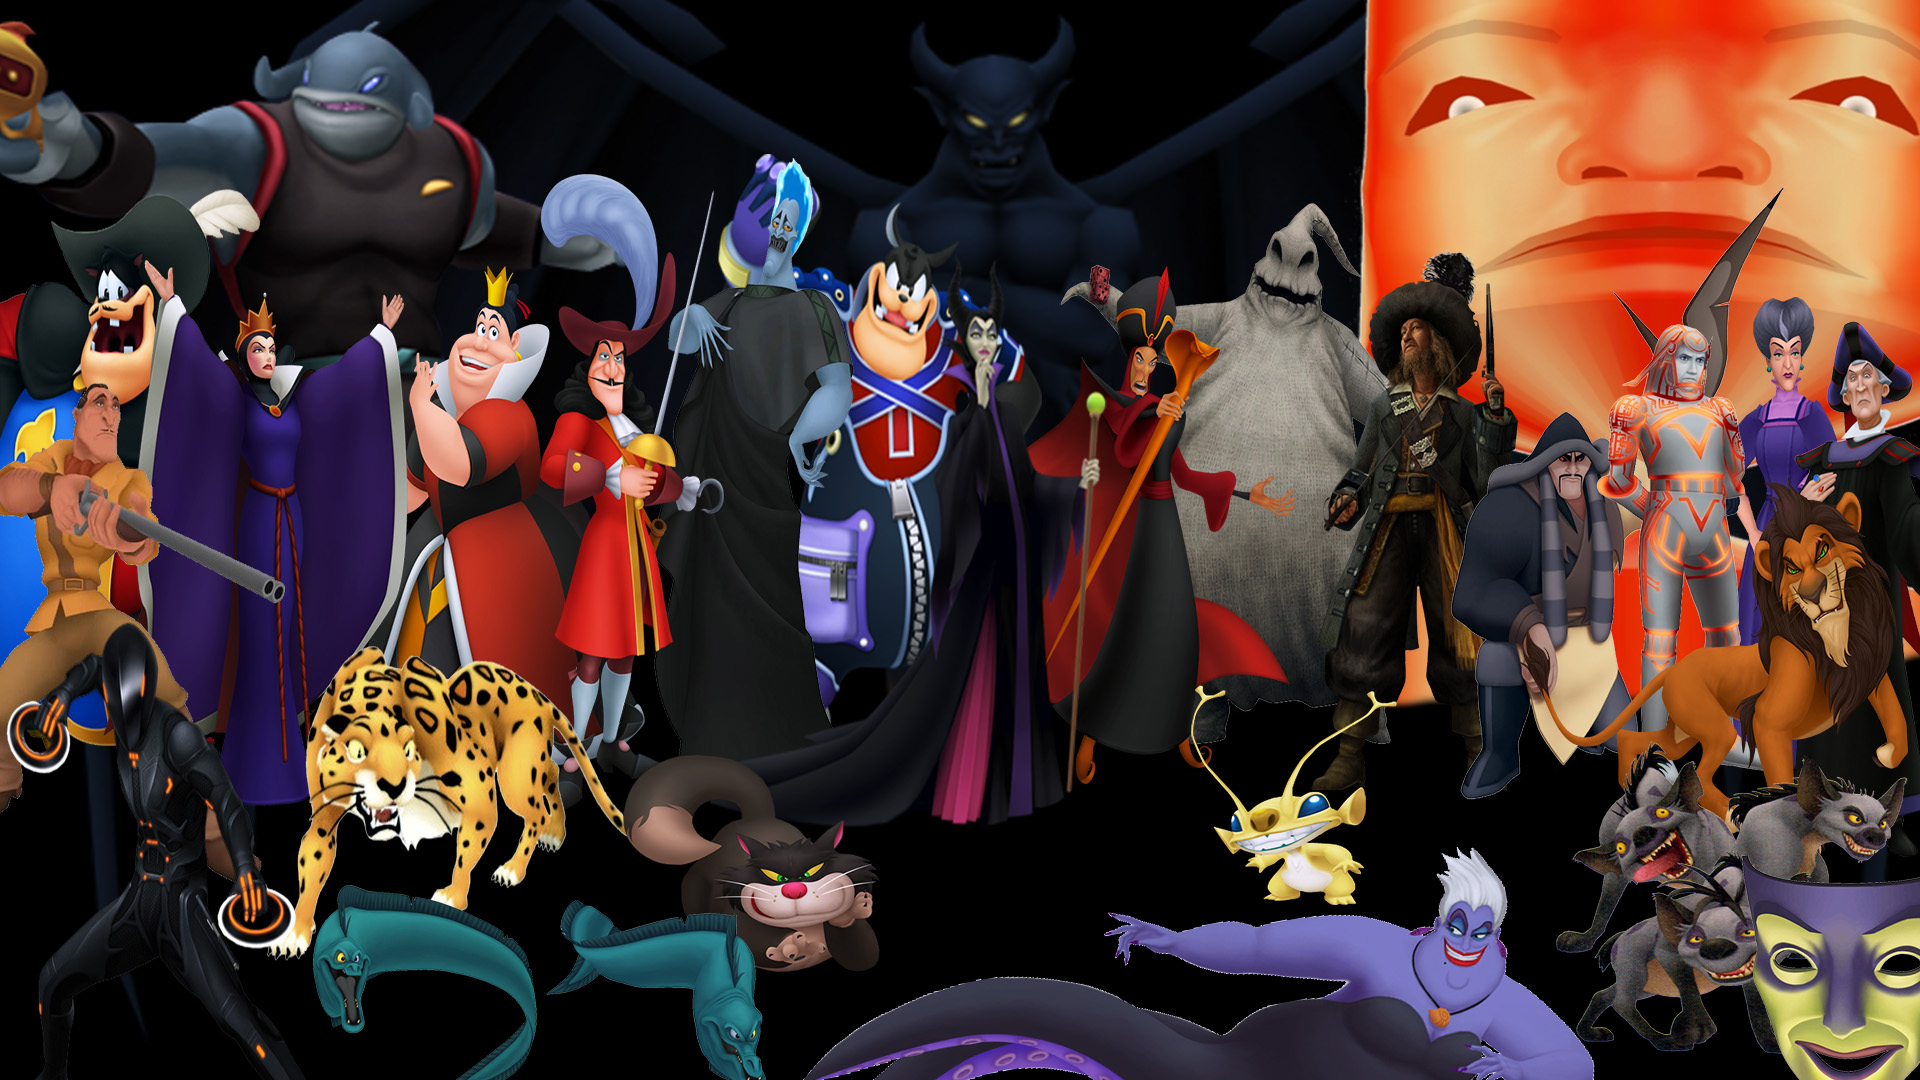 Kingdom Hearts Disney Villains Wallpaper Photos Download Jpg Png Gif Raw Tiff Psd Pdf And Watch Online